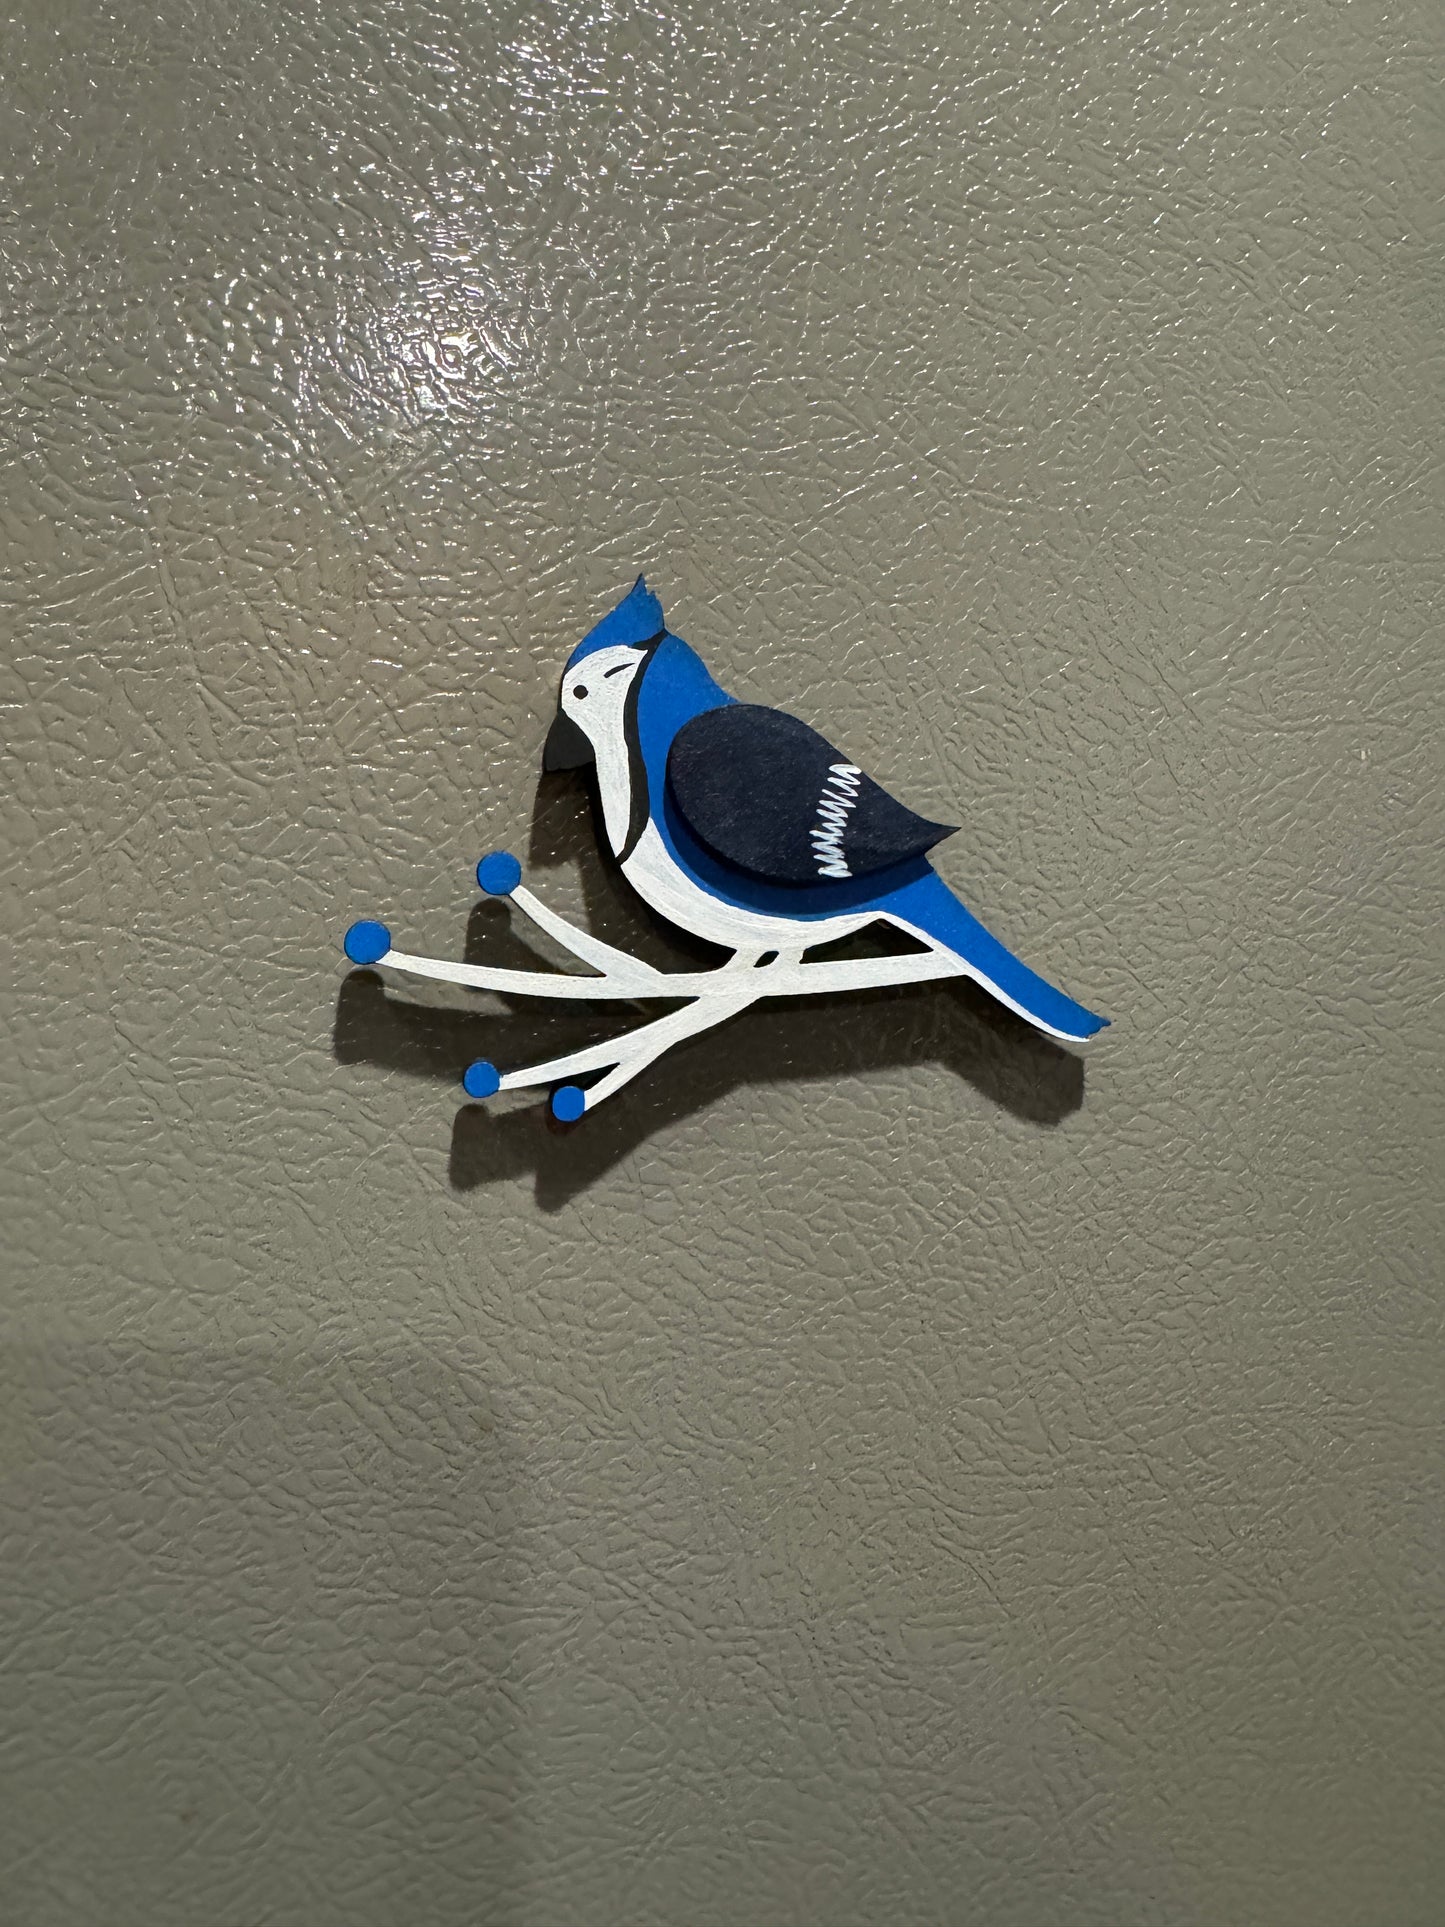 Blue Jay Magnet / Ornament